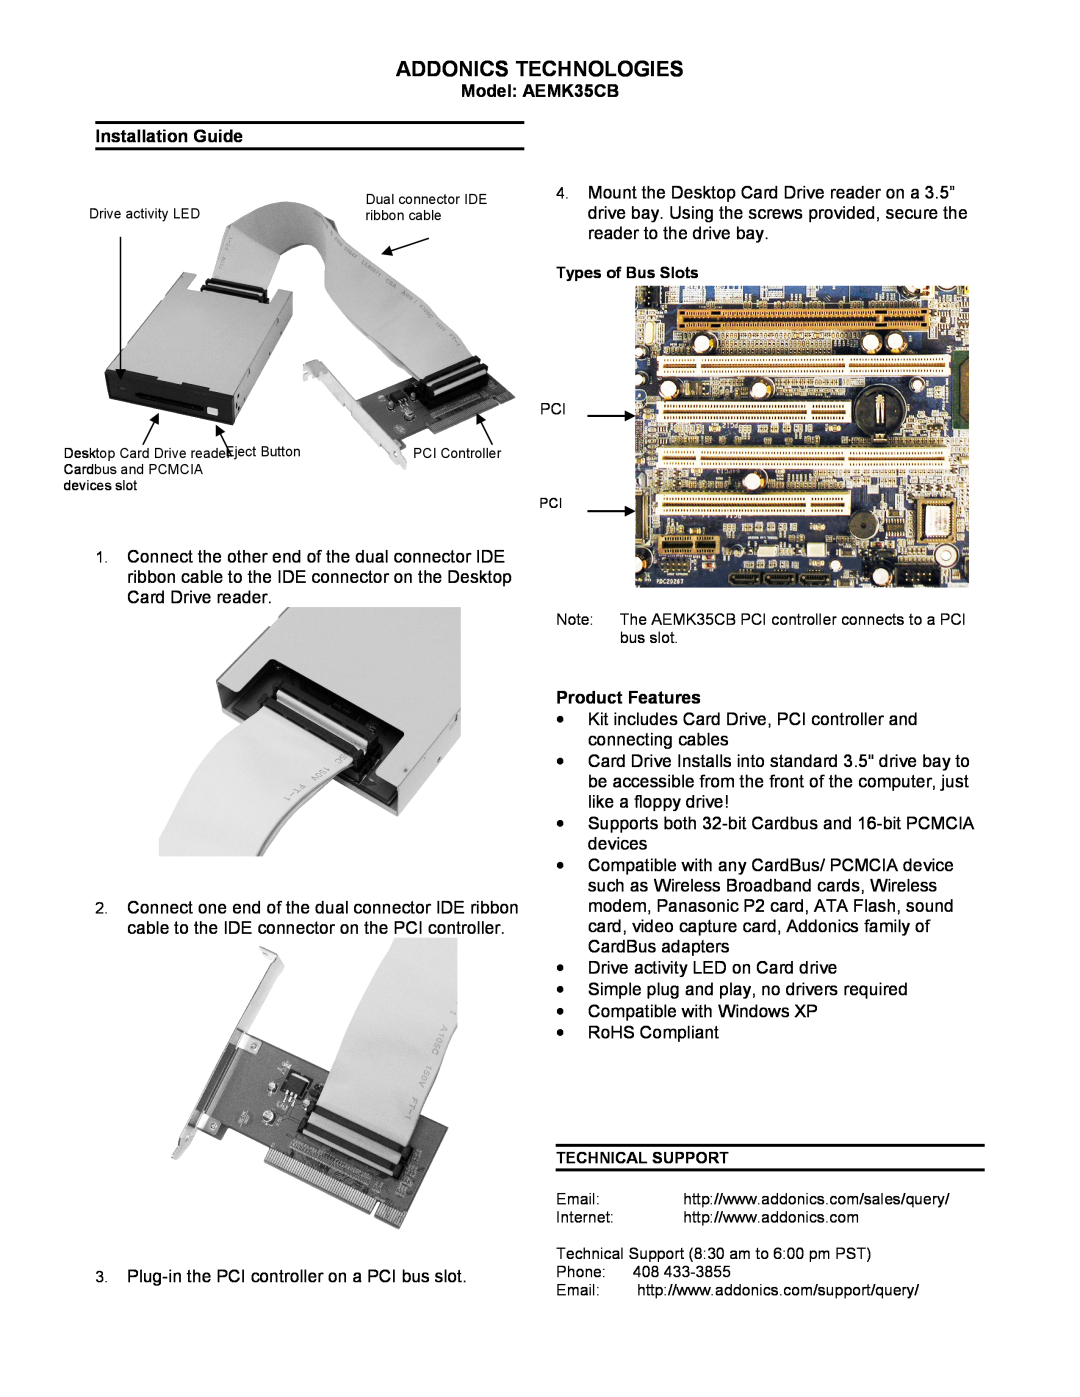 Addonics Technologies manual Addonics Technologies, Model AEMK35CB Installation Guide, Product Features 